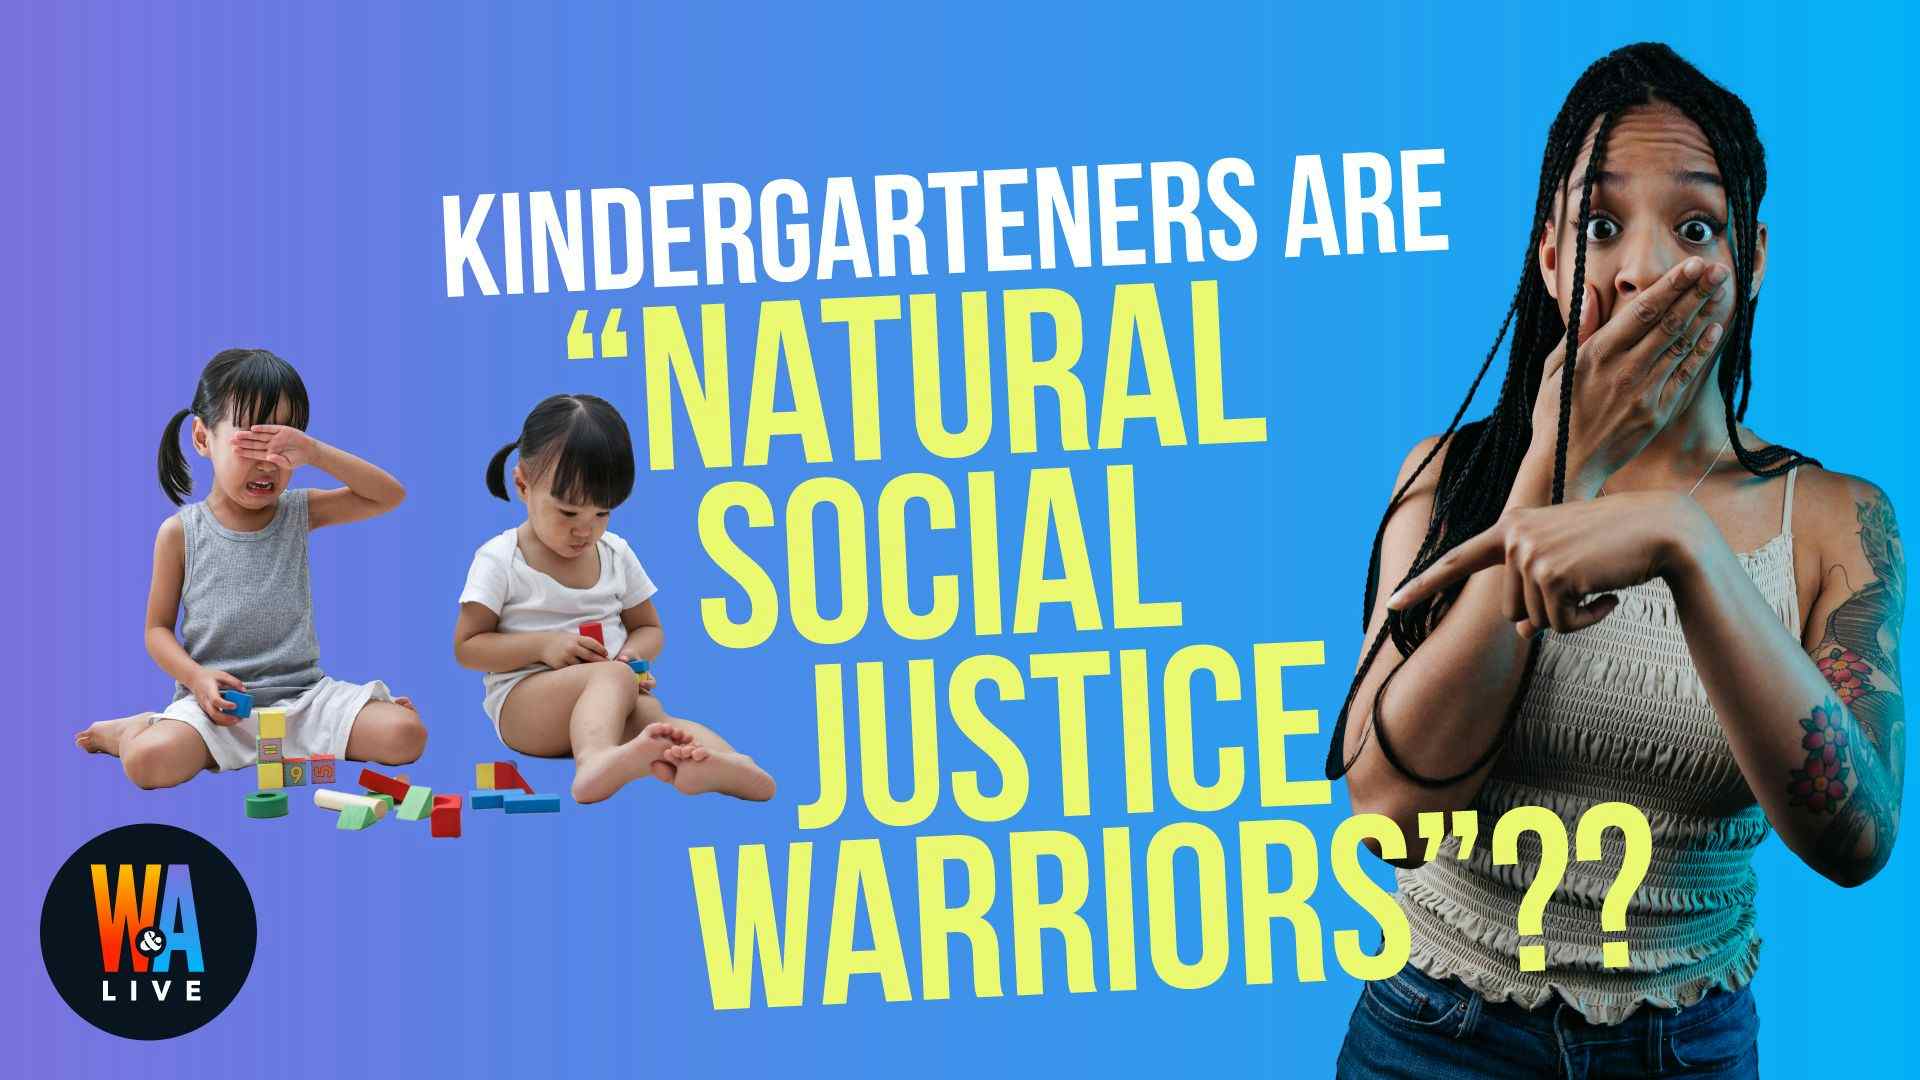 Teacher: “Kindergarteners Are Natural Social Justice Warriors”